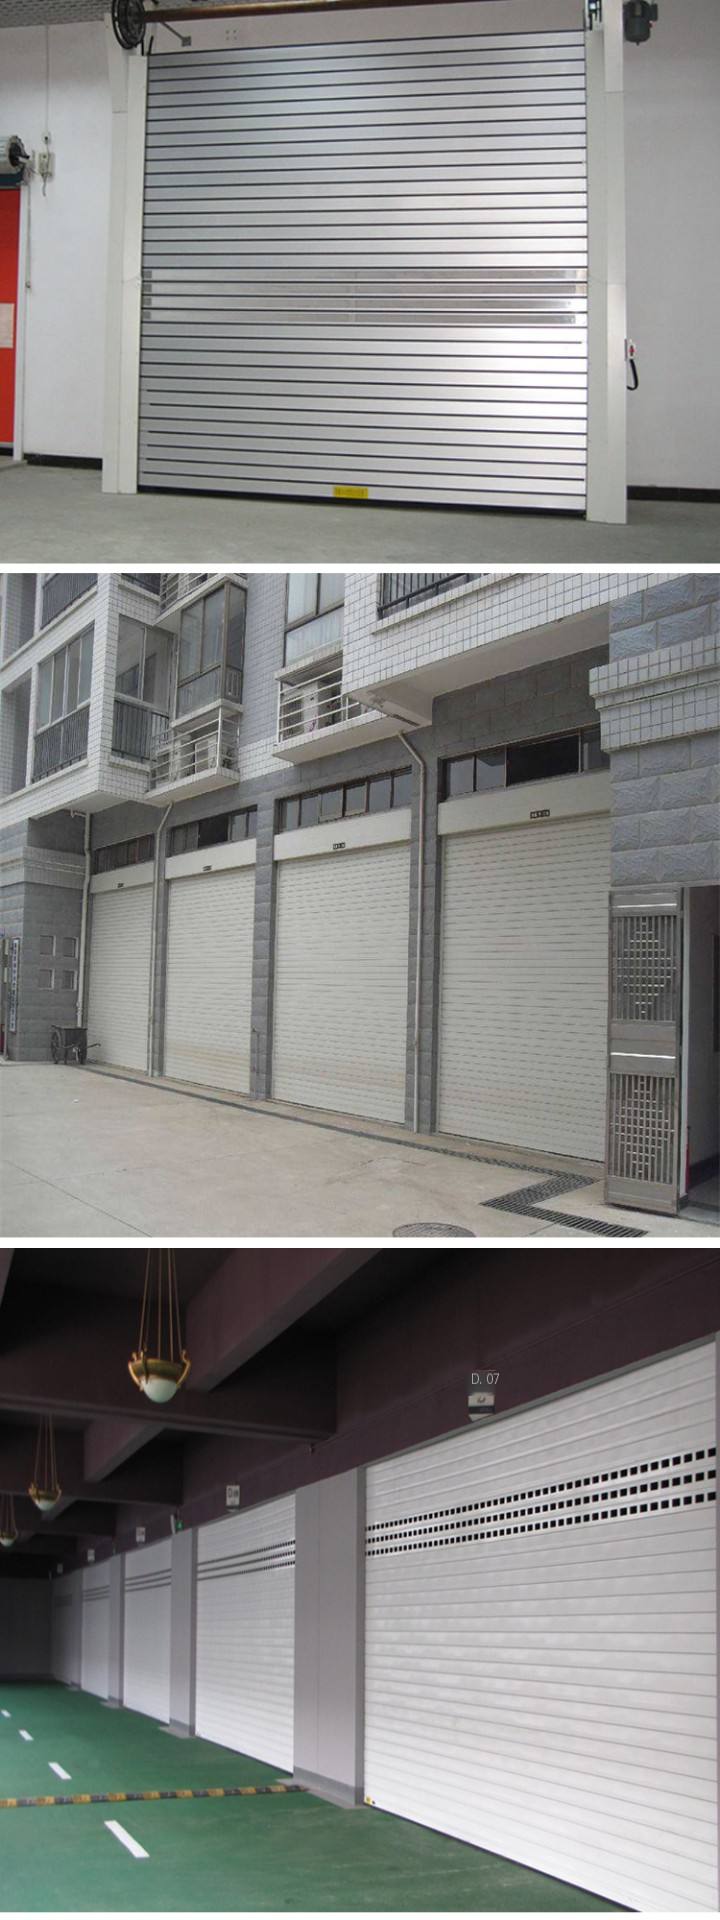 Zhongyi Villa white steel Roller shutter door with complete specifications, thickened door plate, easy to clean